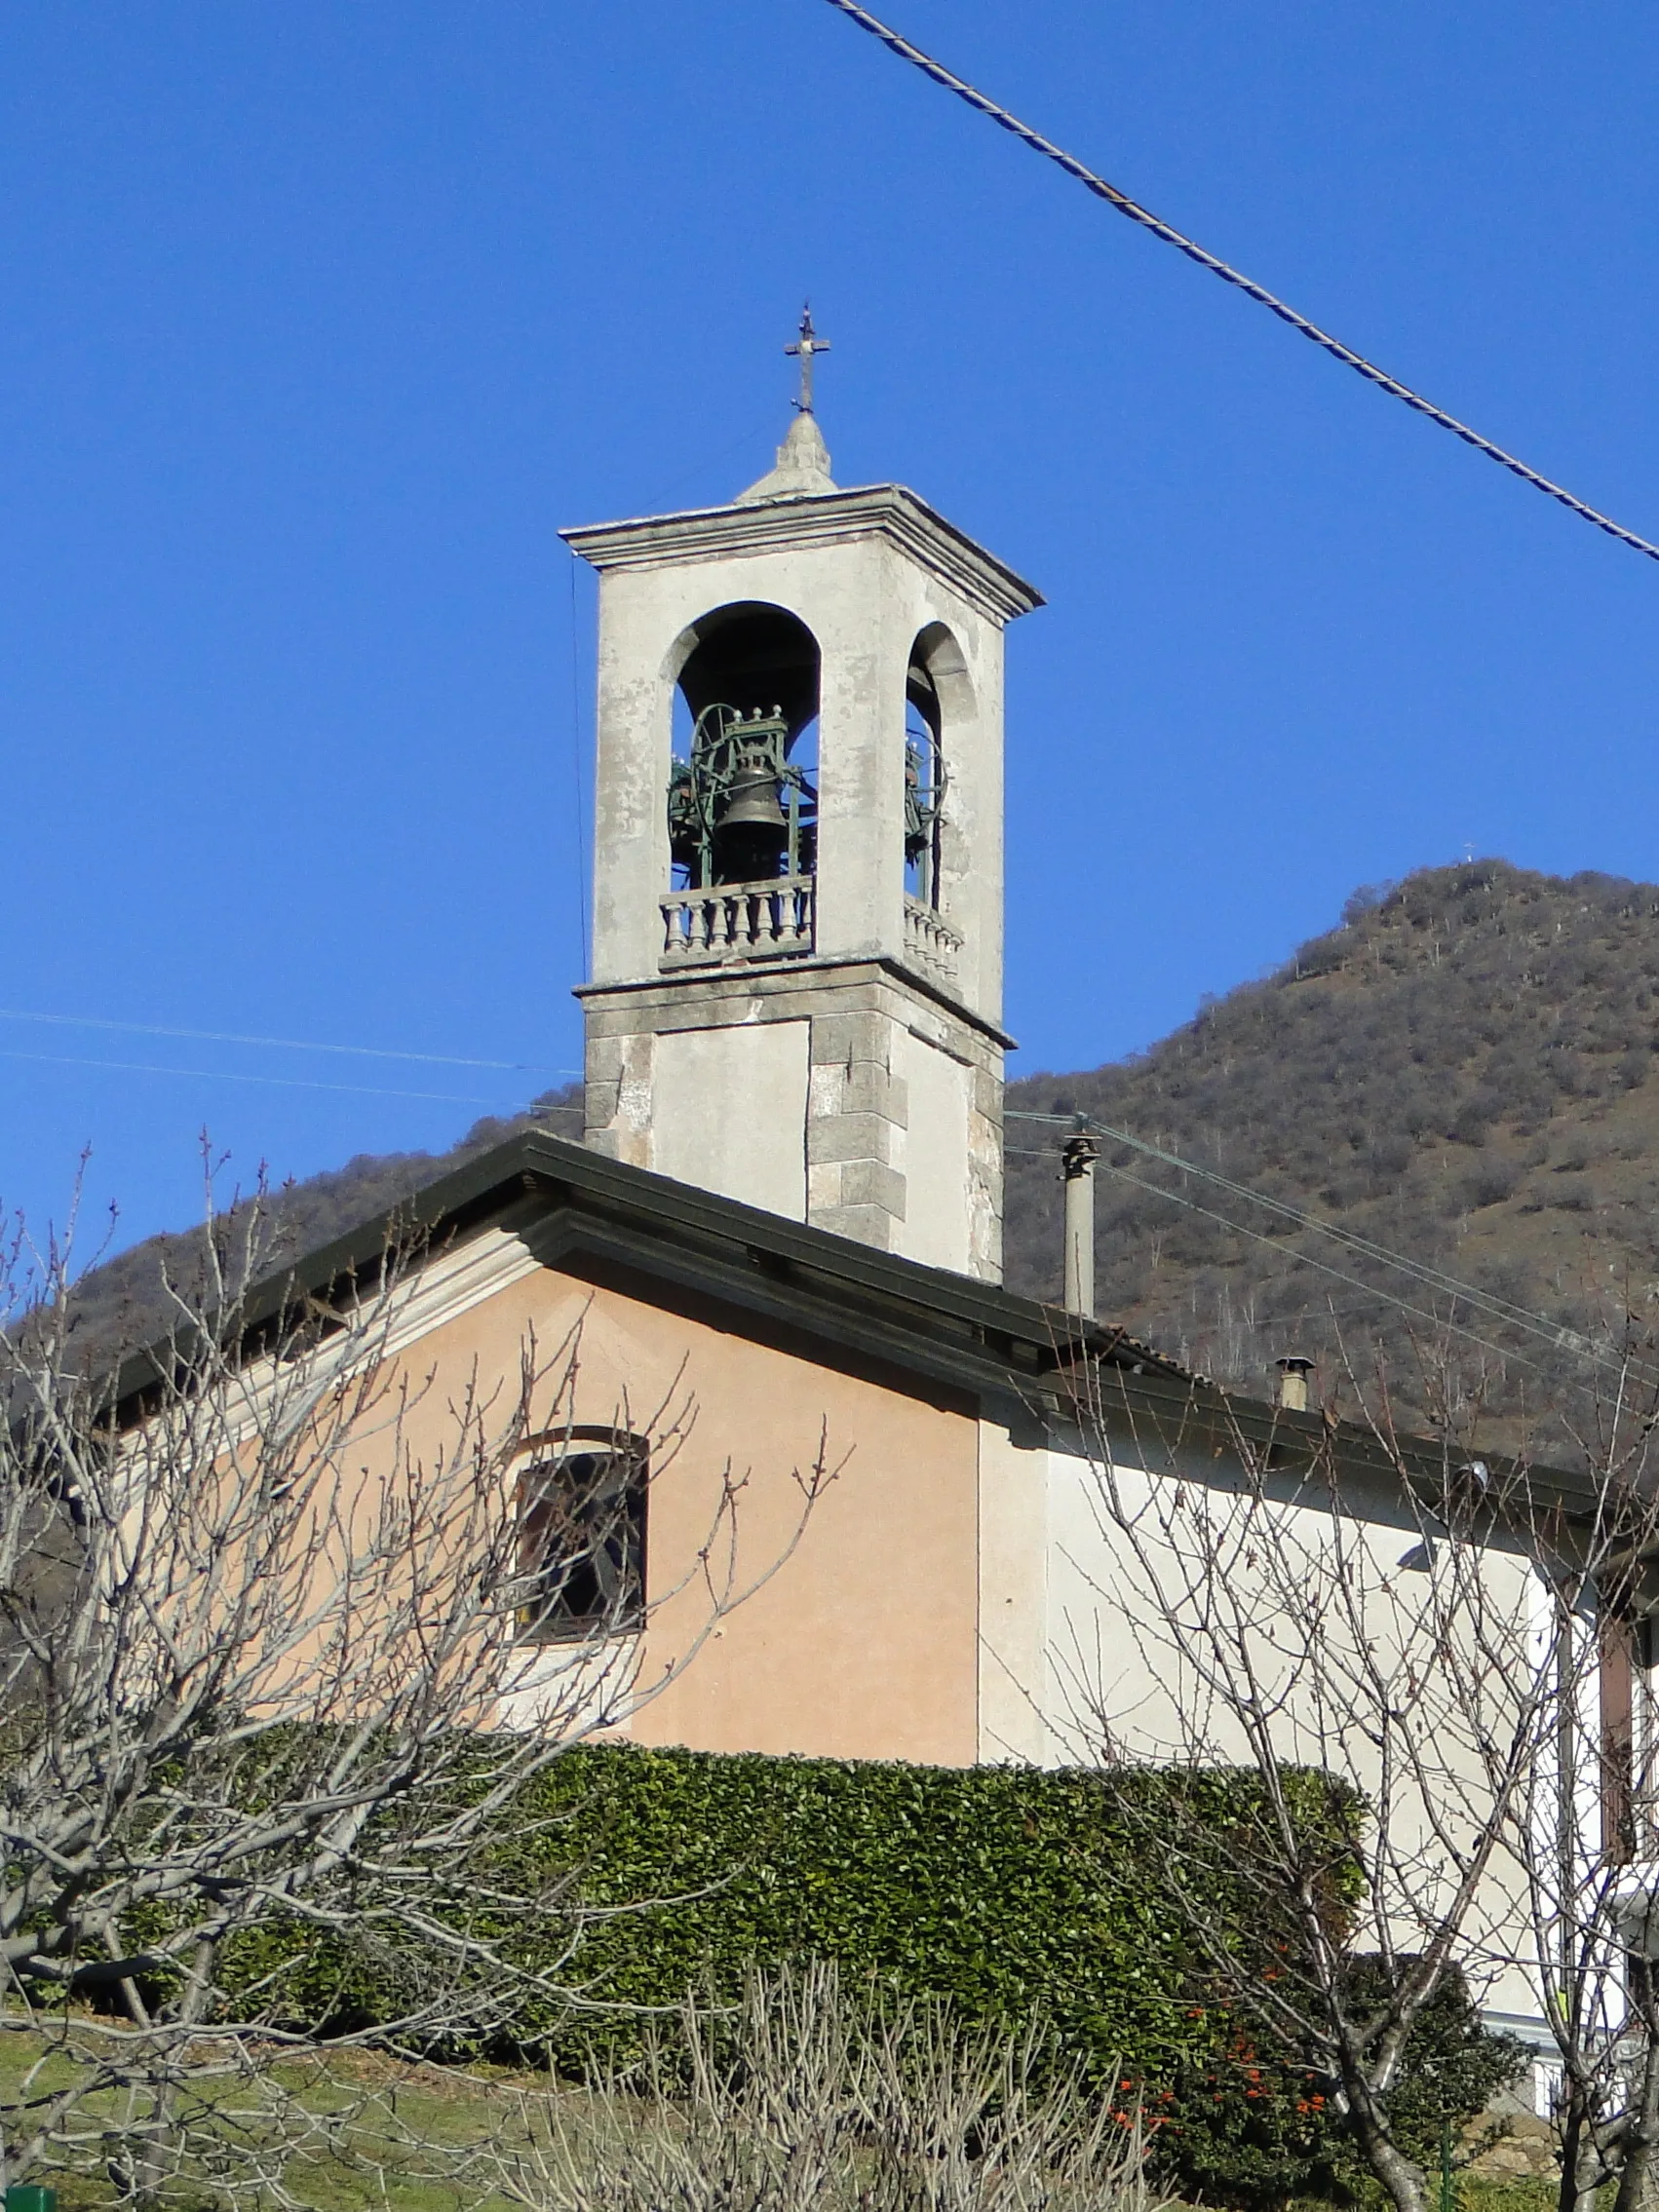 Photo showing: Burro, fraz. di Alzano Lombardo (BG), Italy. Chiesa San Bernardo